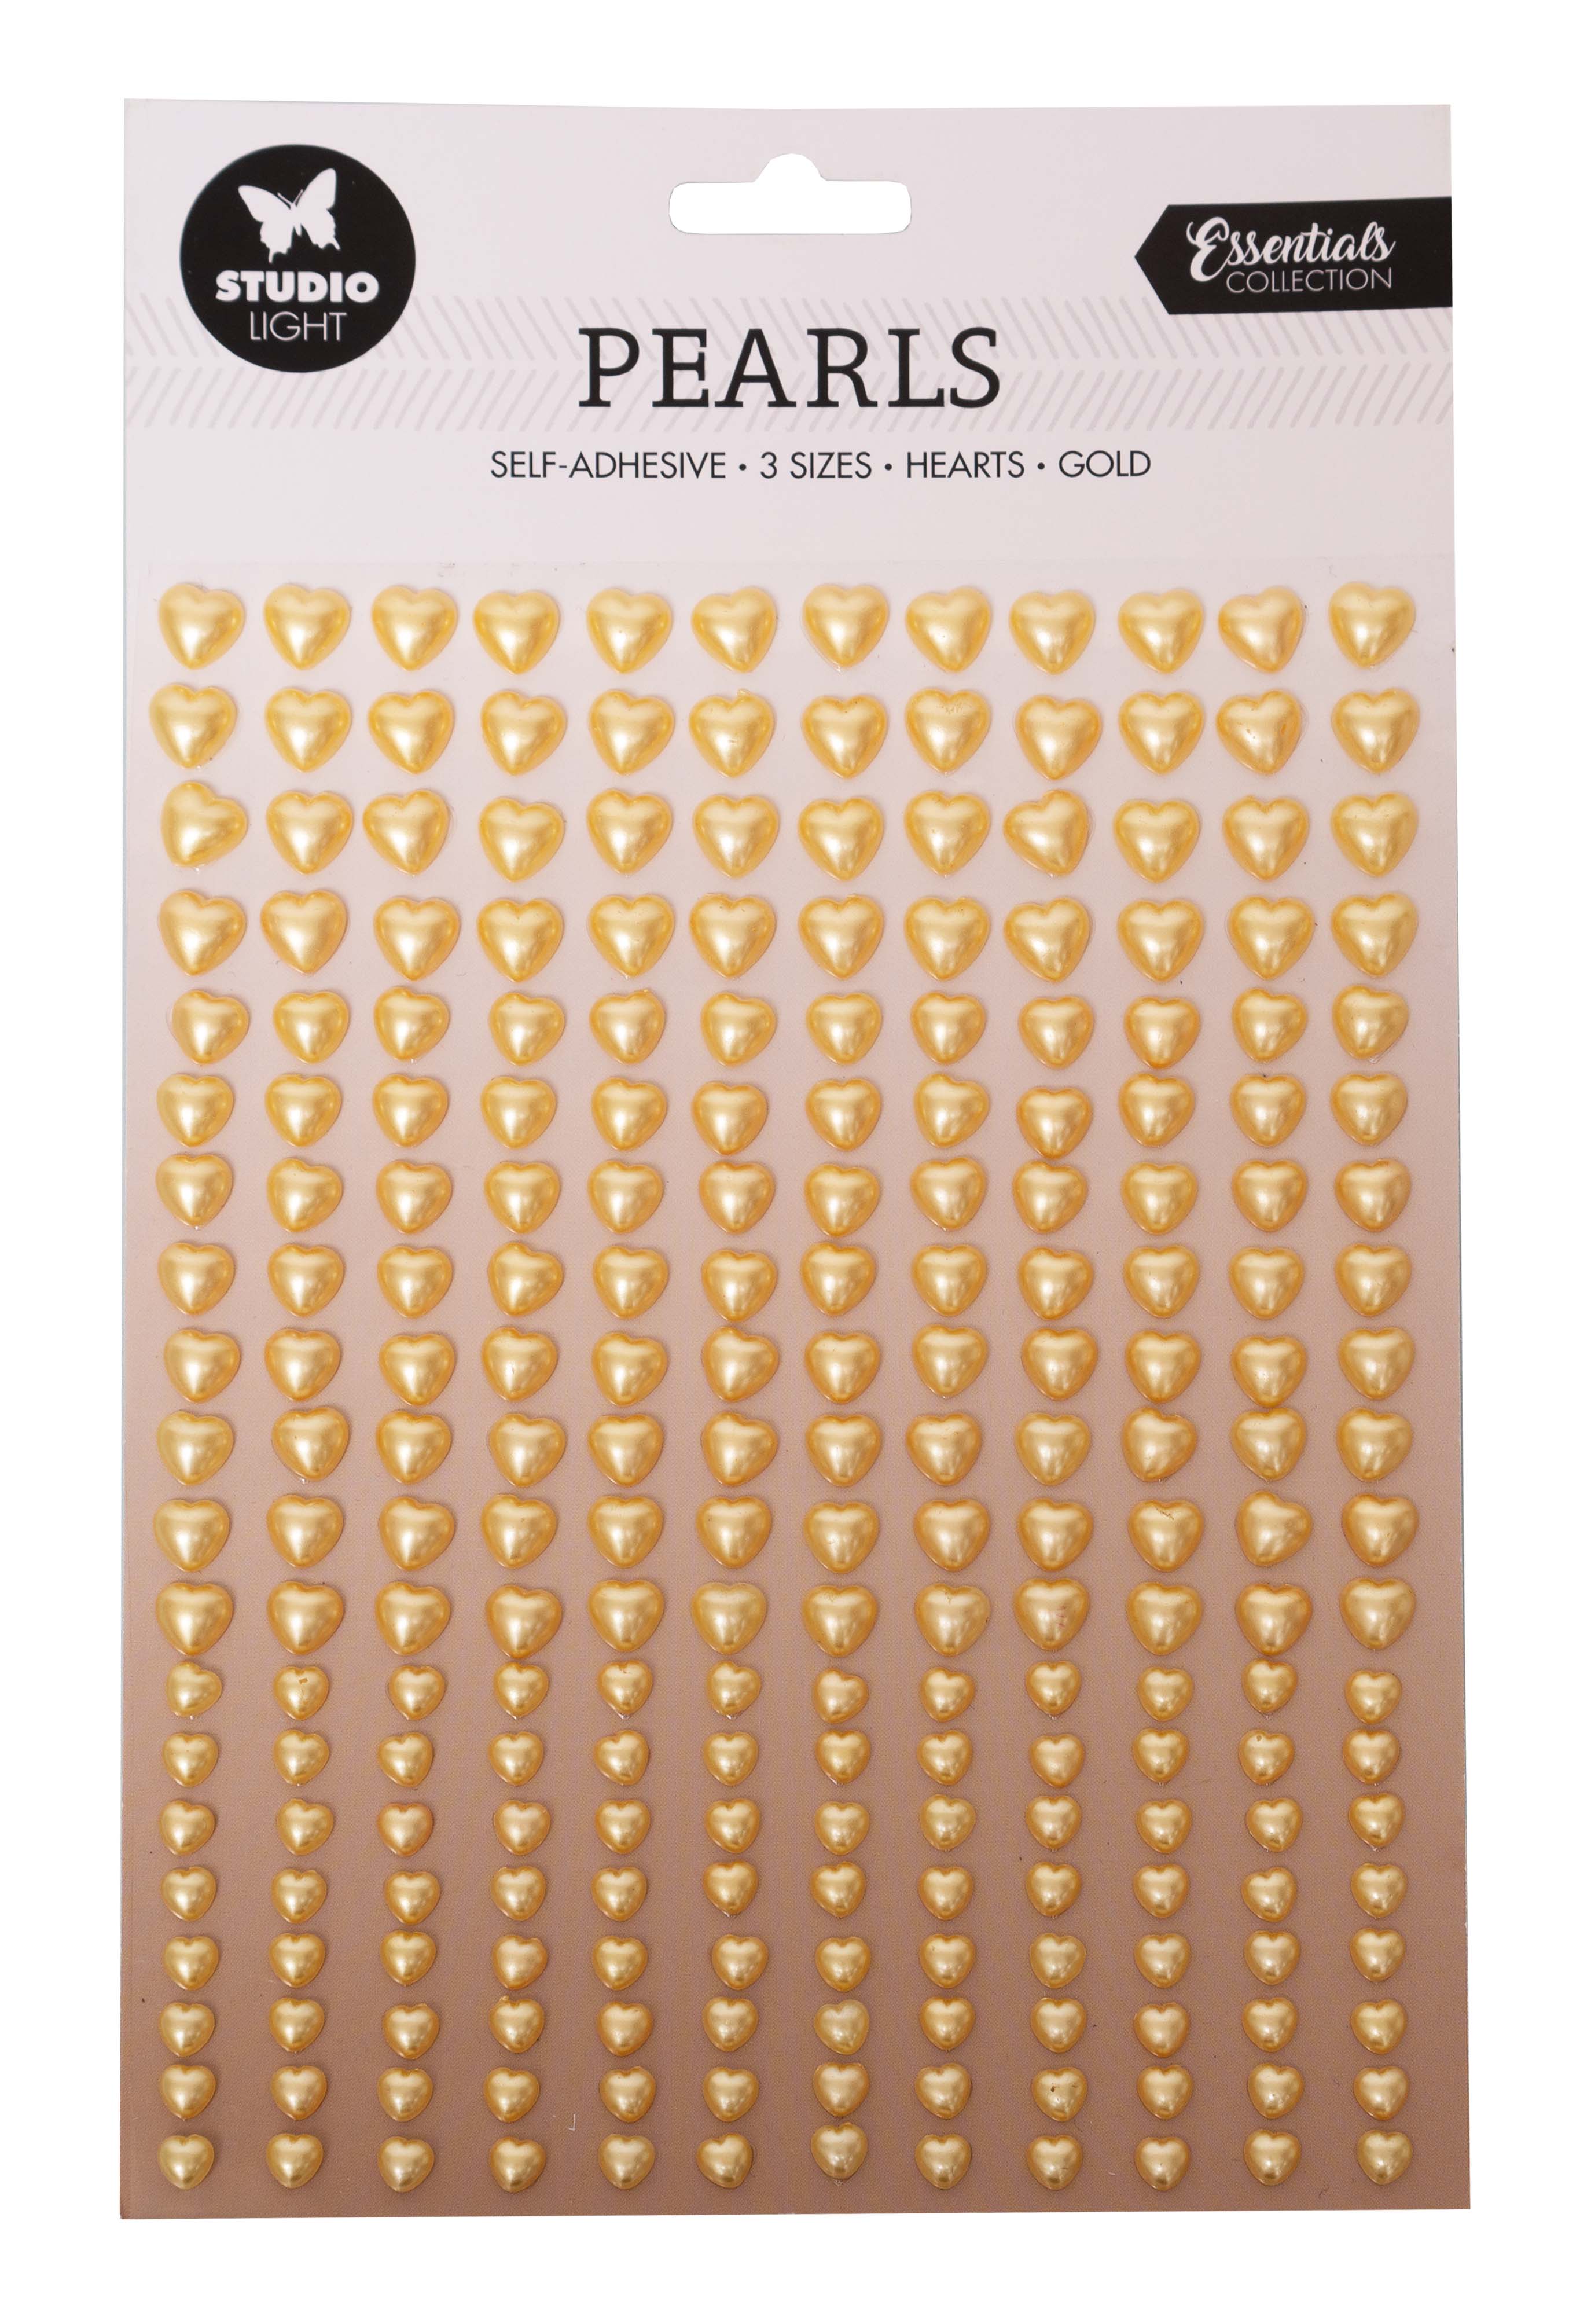 SL Self-Adhesive Pearls Gold Hearts Essentials 140x230x4mm 240 PC nr.07